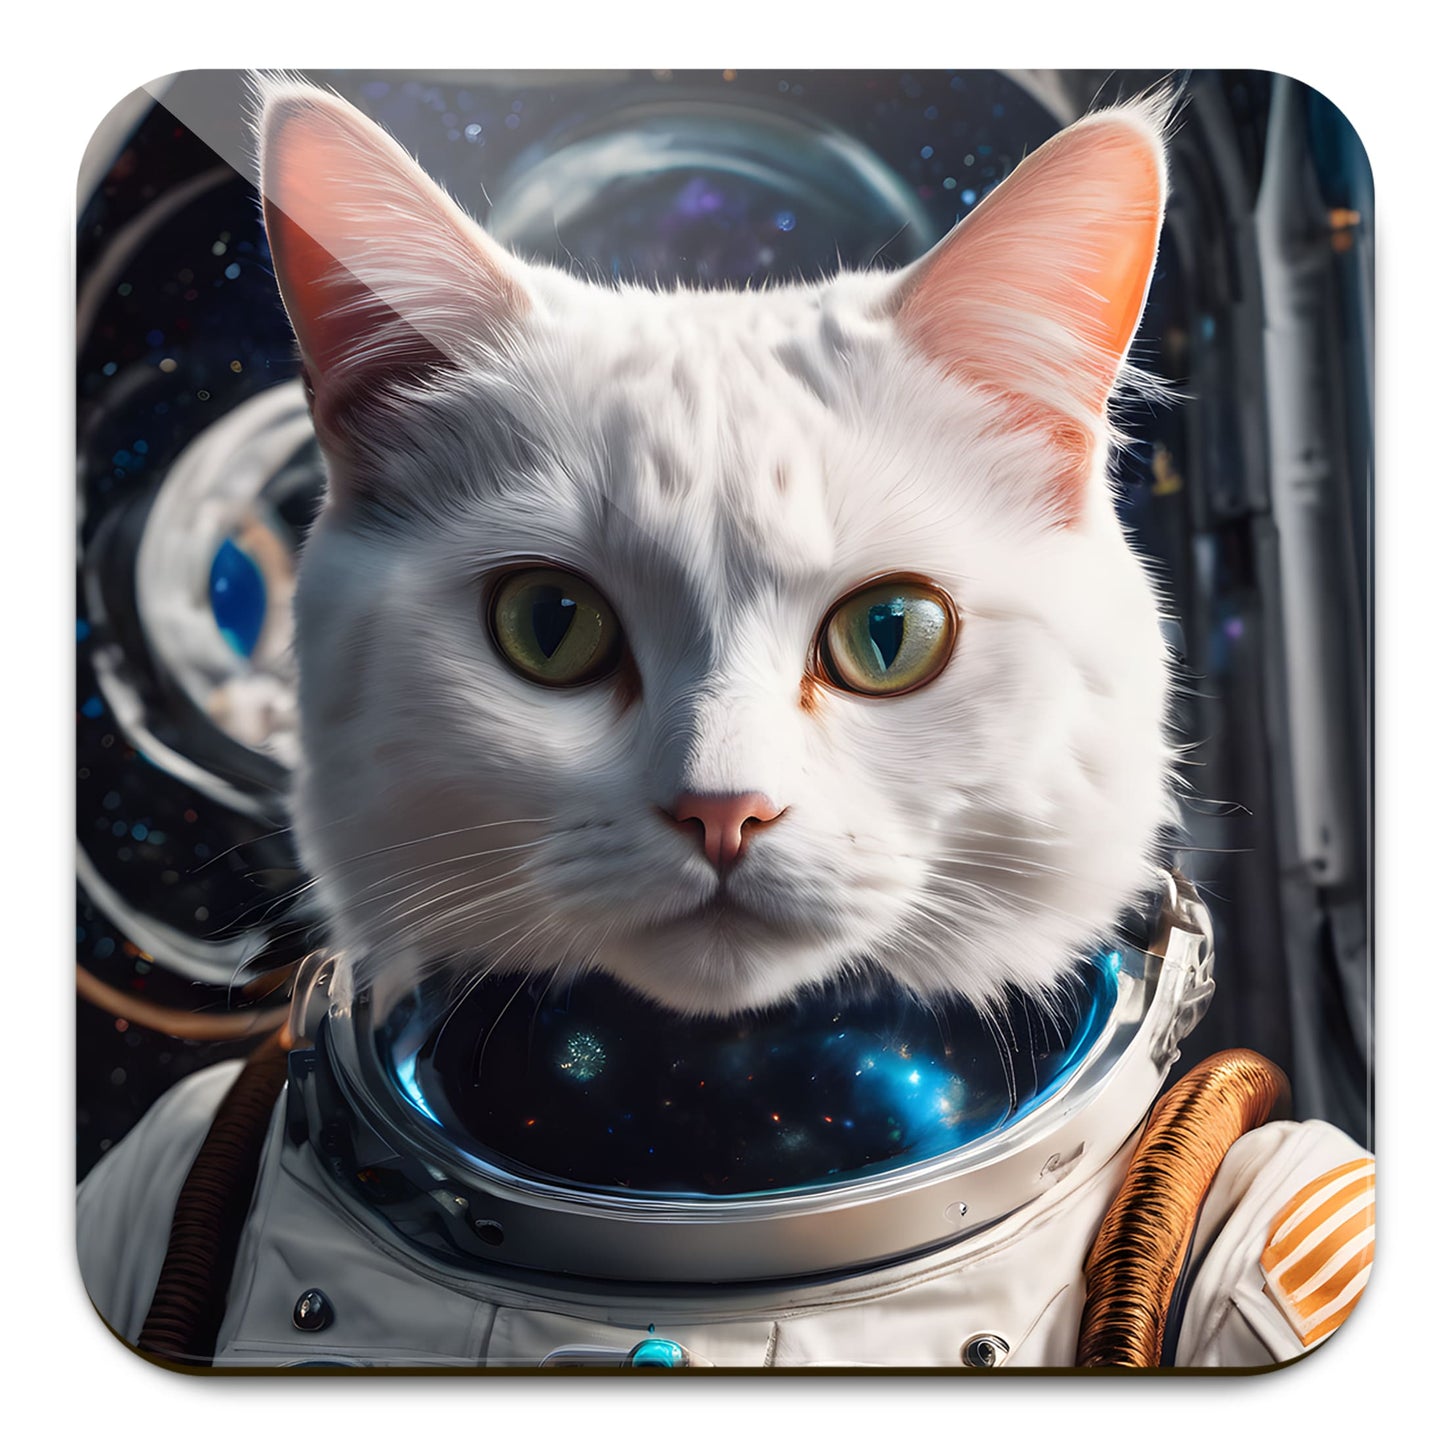 Cat Astronaut Space Art 4 x Coaster Set